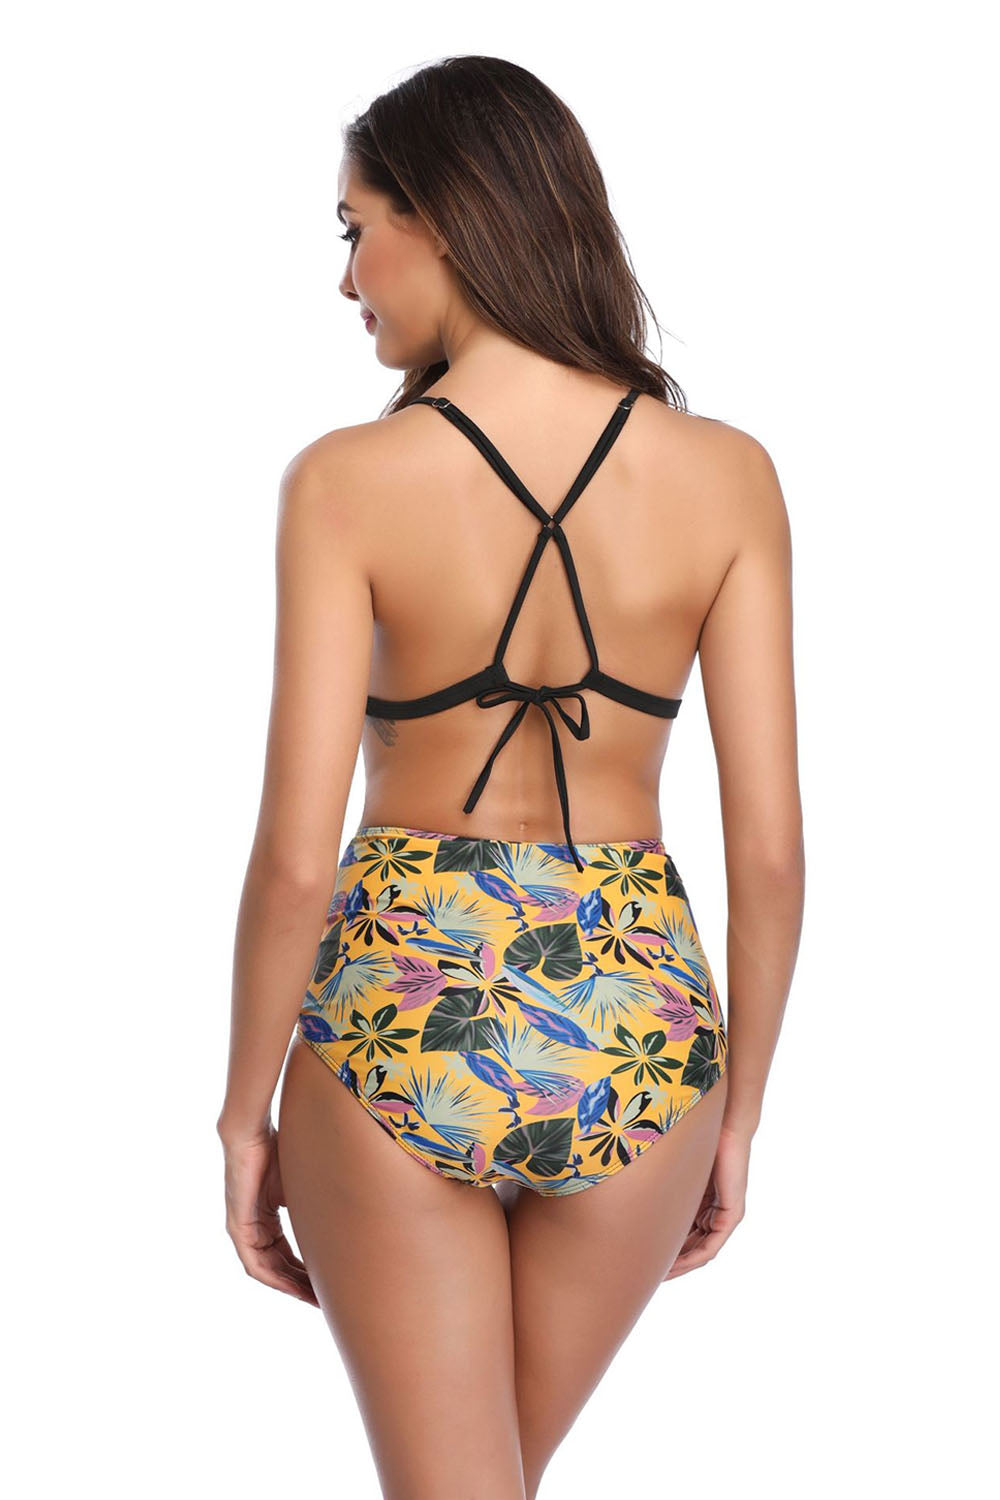 Iyasson Womens High Waist Two Pieces Bikini Set Padded Floral Printed Swimsuit